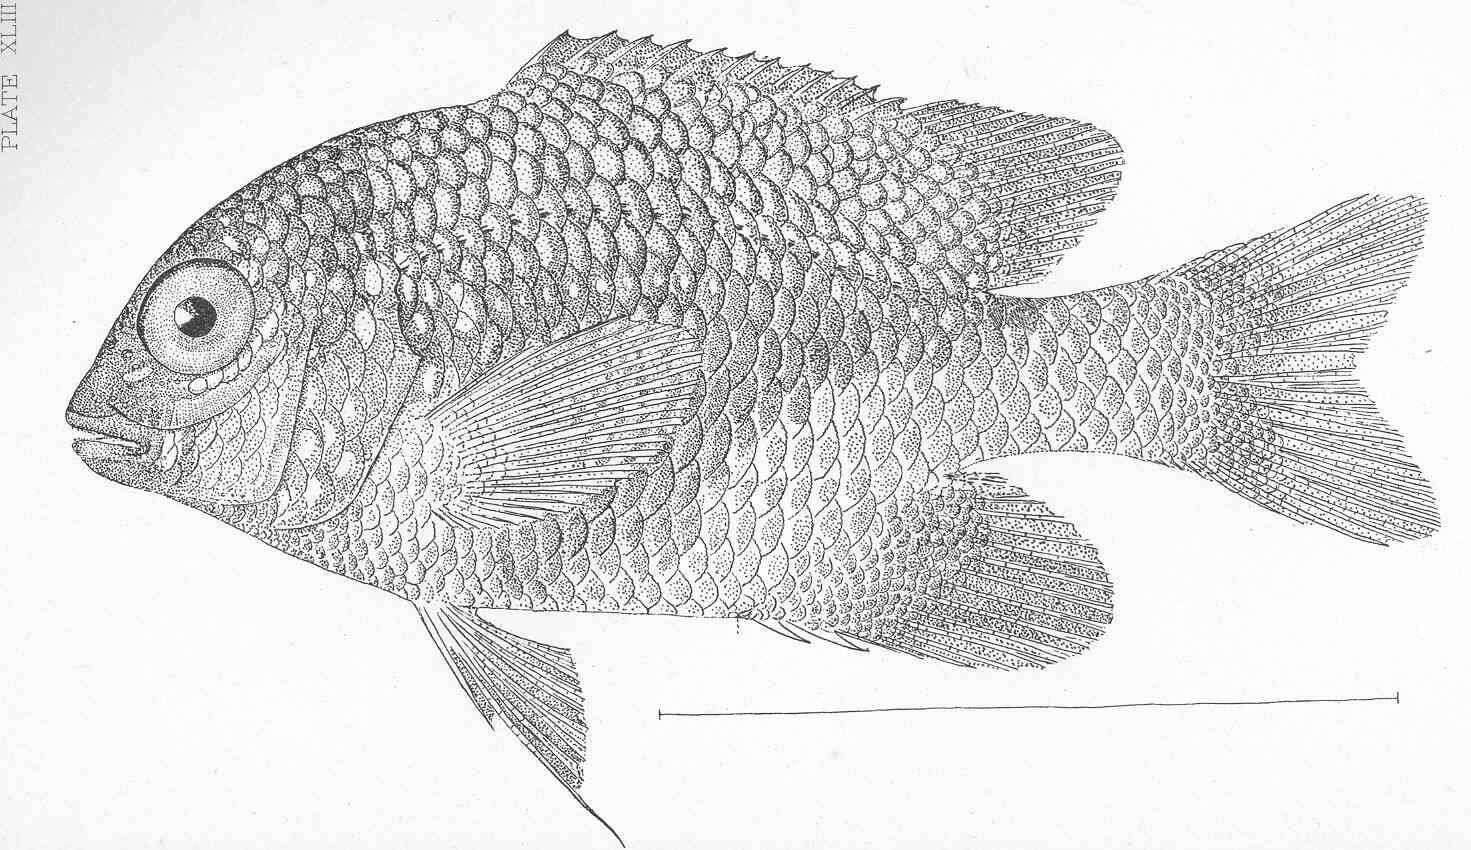 Image of Microspathodon